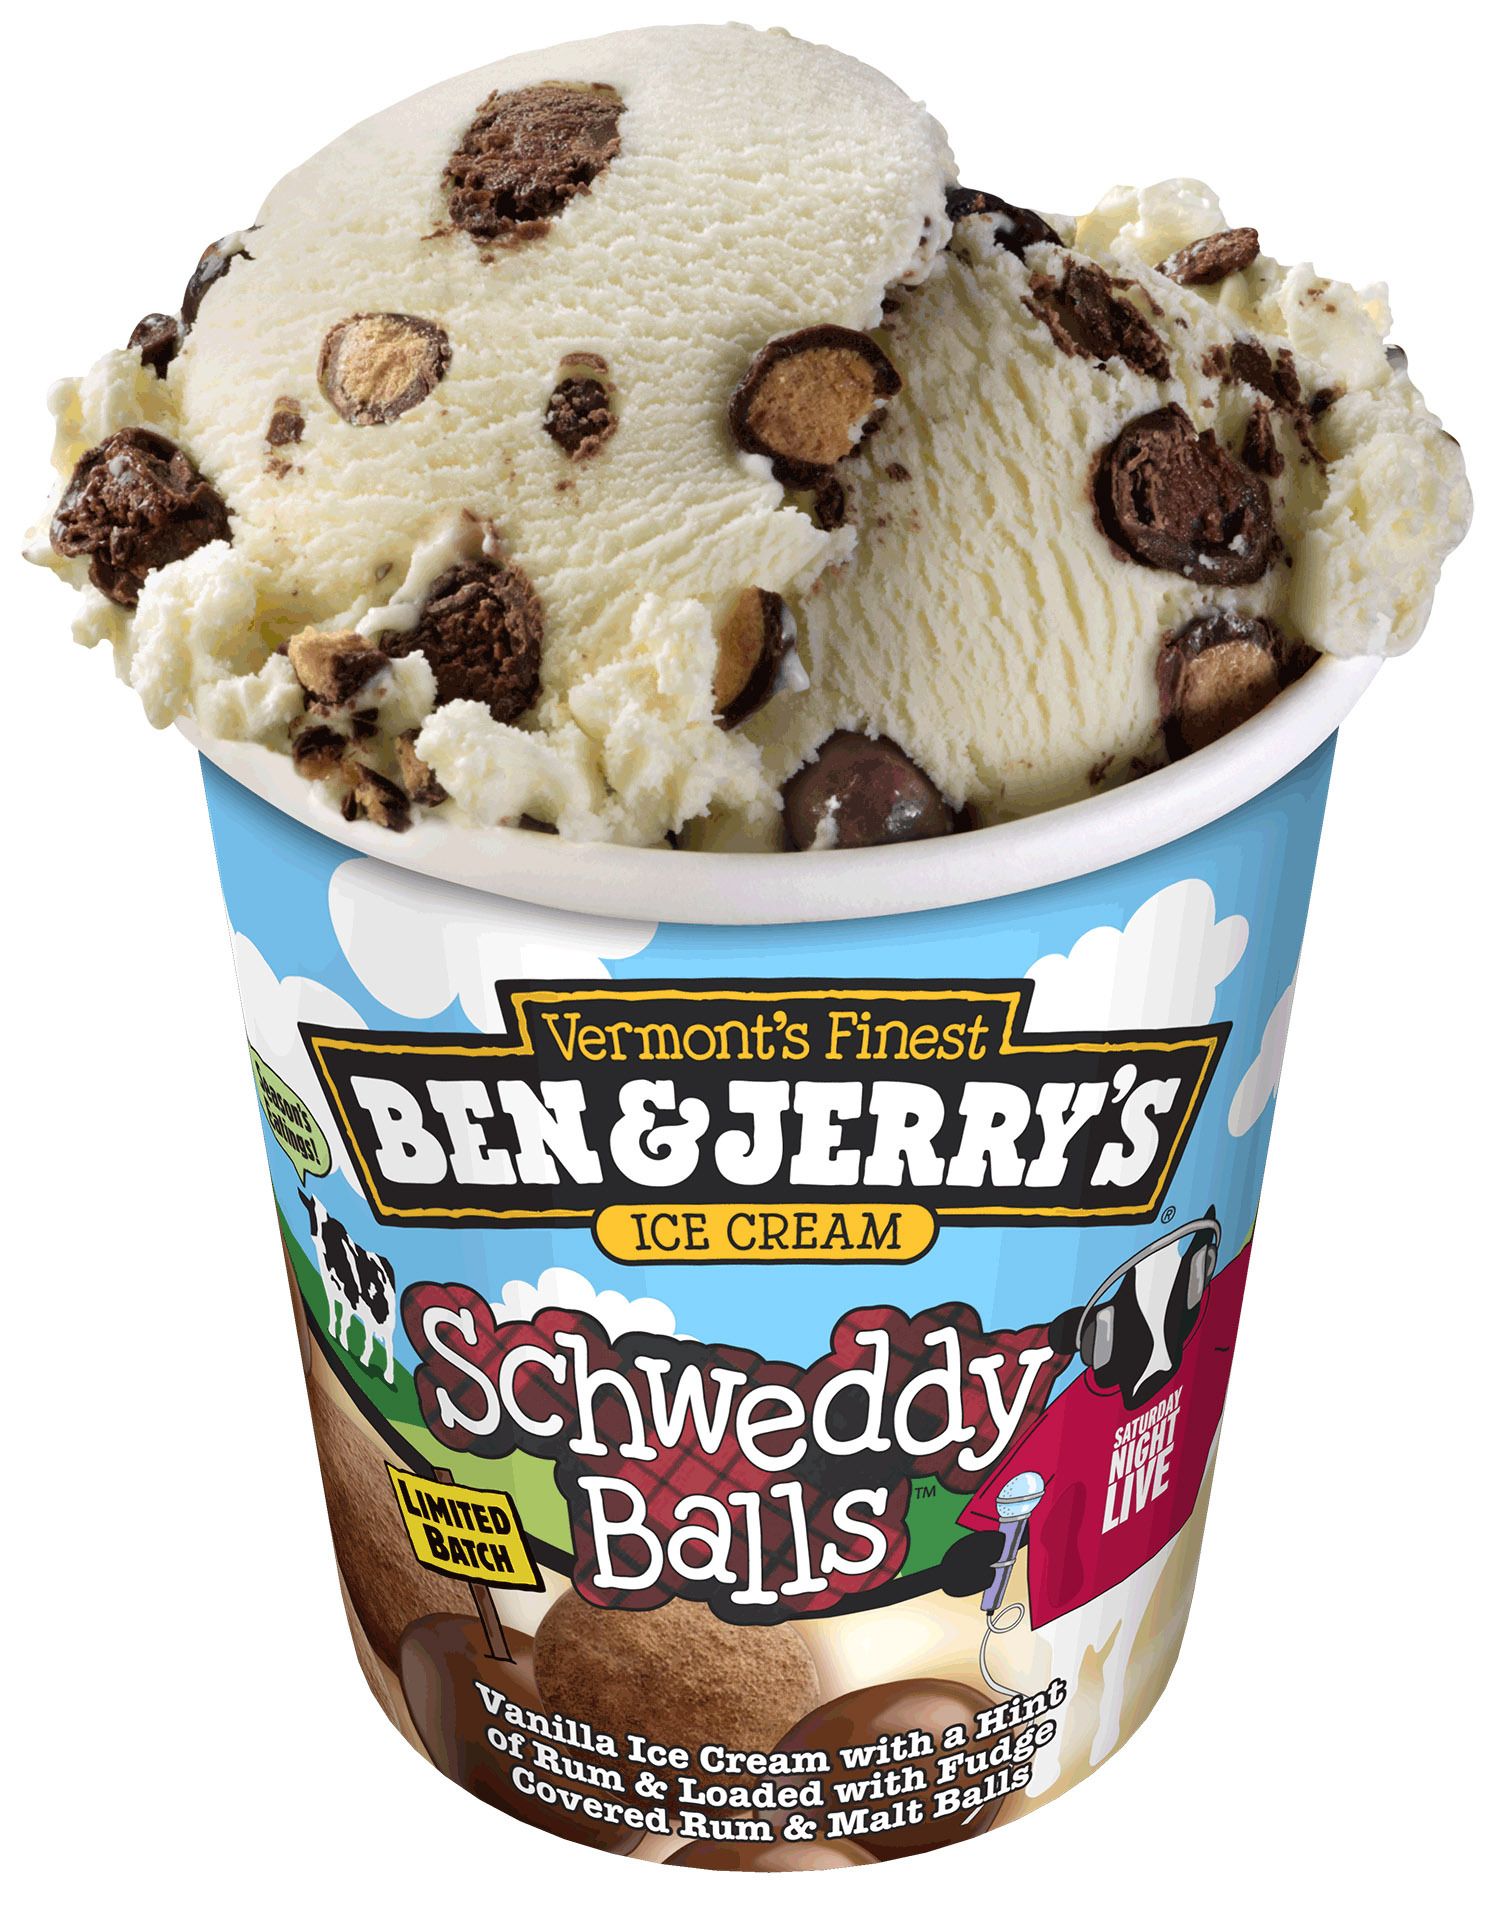 Now you can taste SNL’s Schweddy Balls, thanks to Ben & Jerry’s